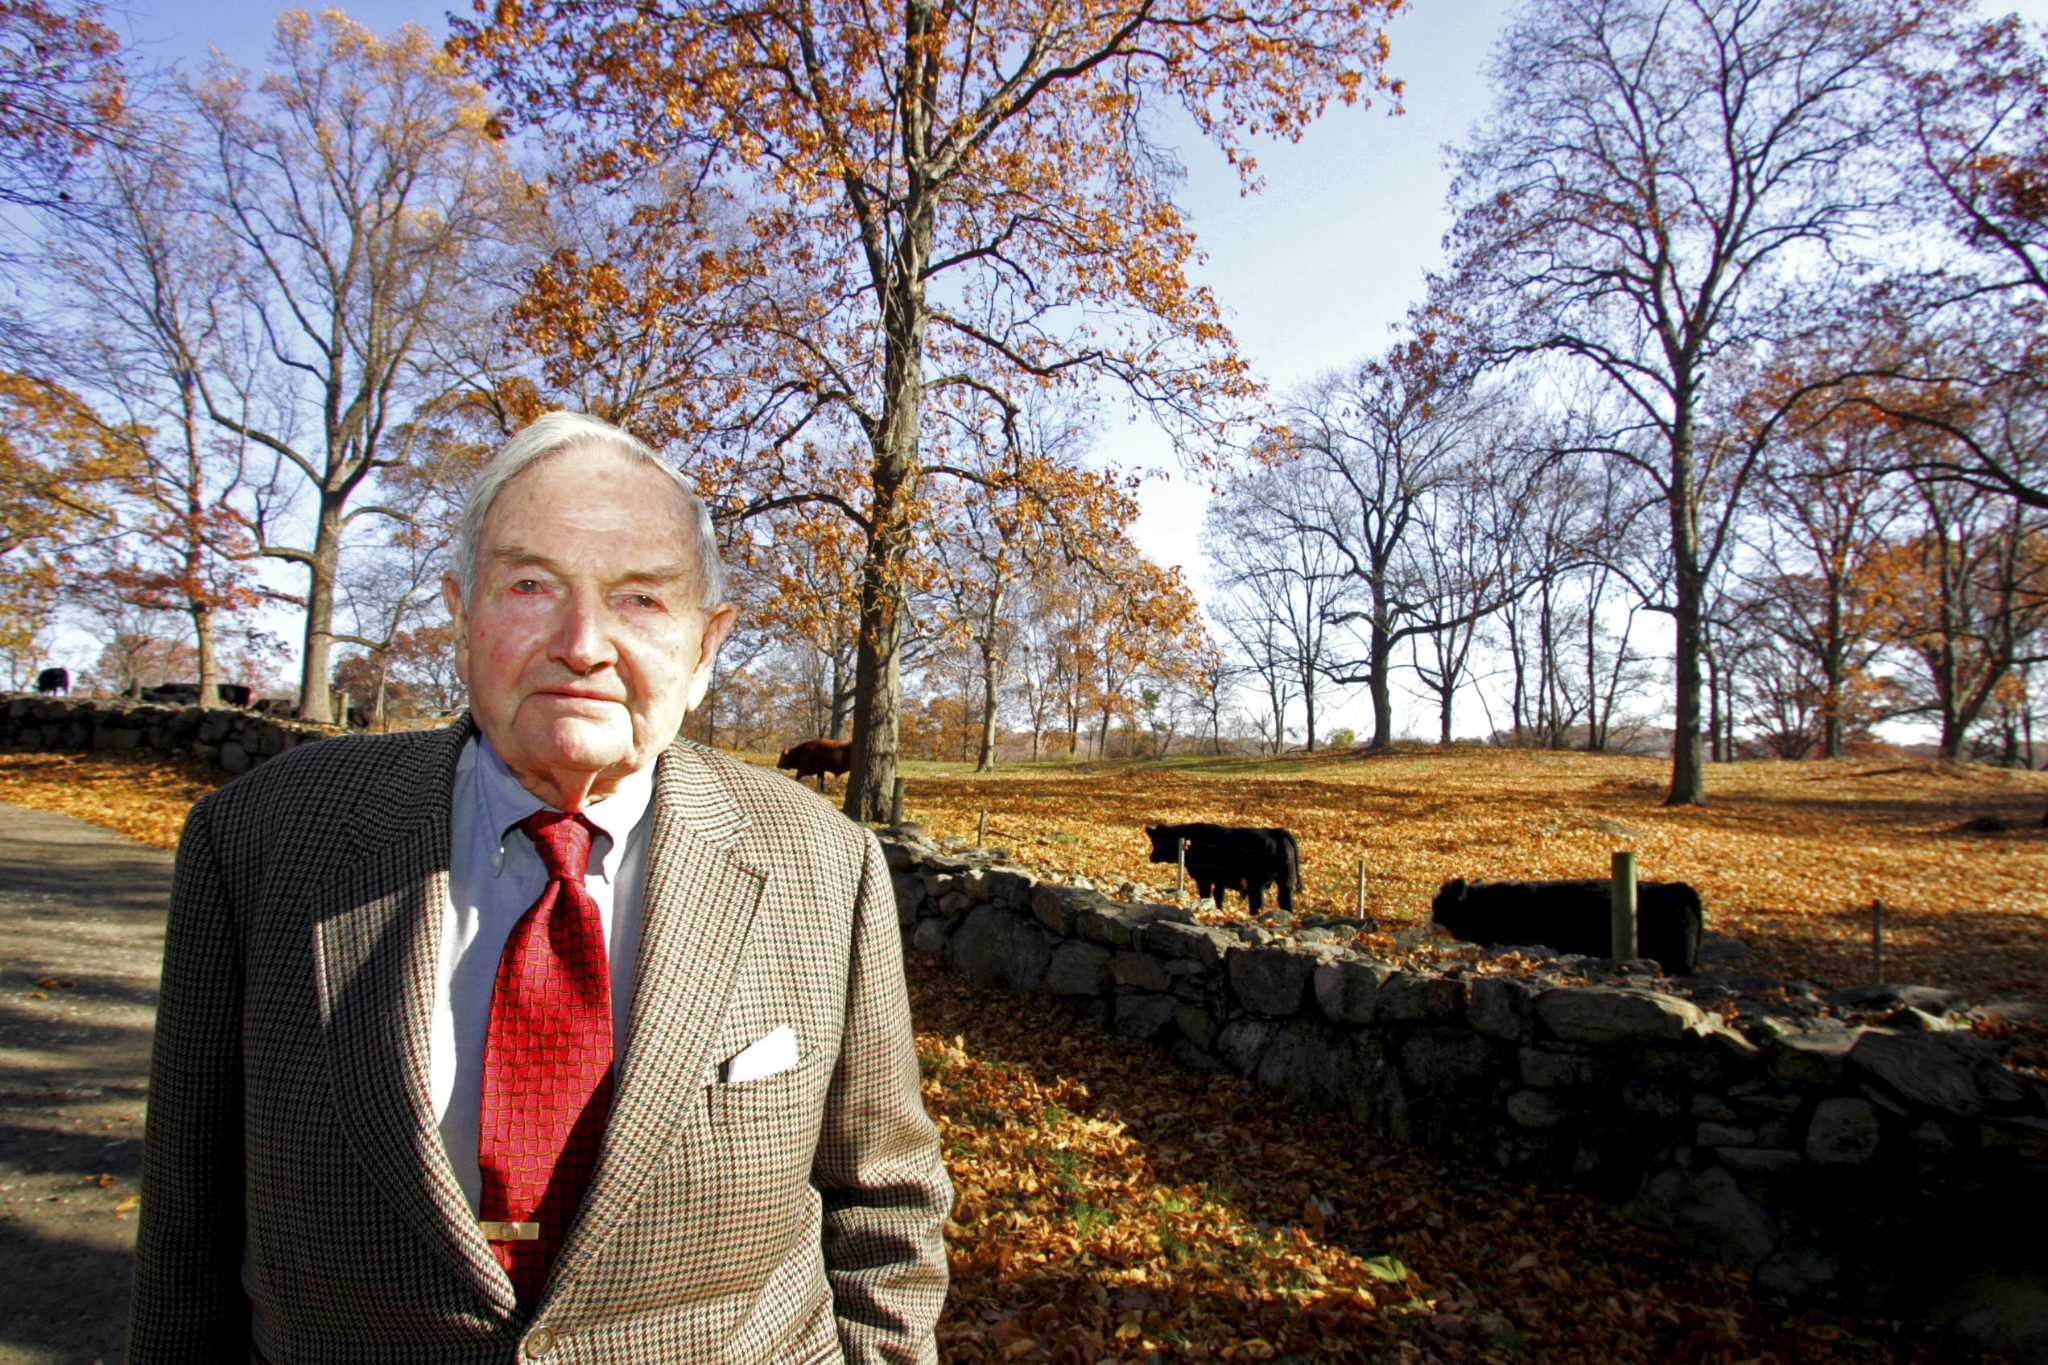 David Rockefeller, Grandson of Standard Oil Co-Founder, Dies at 101